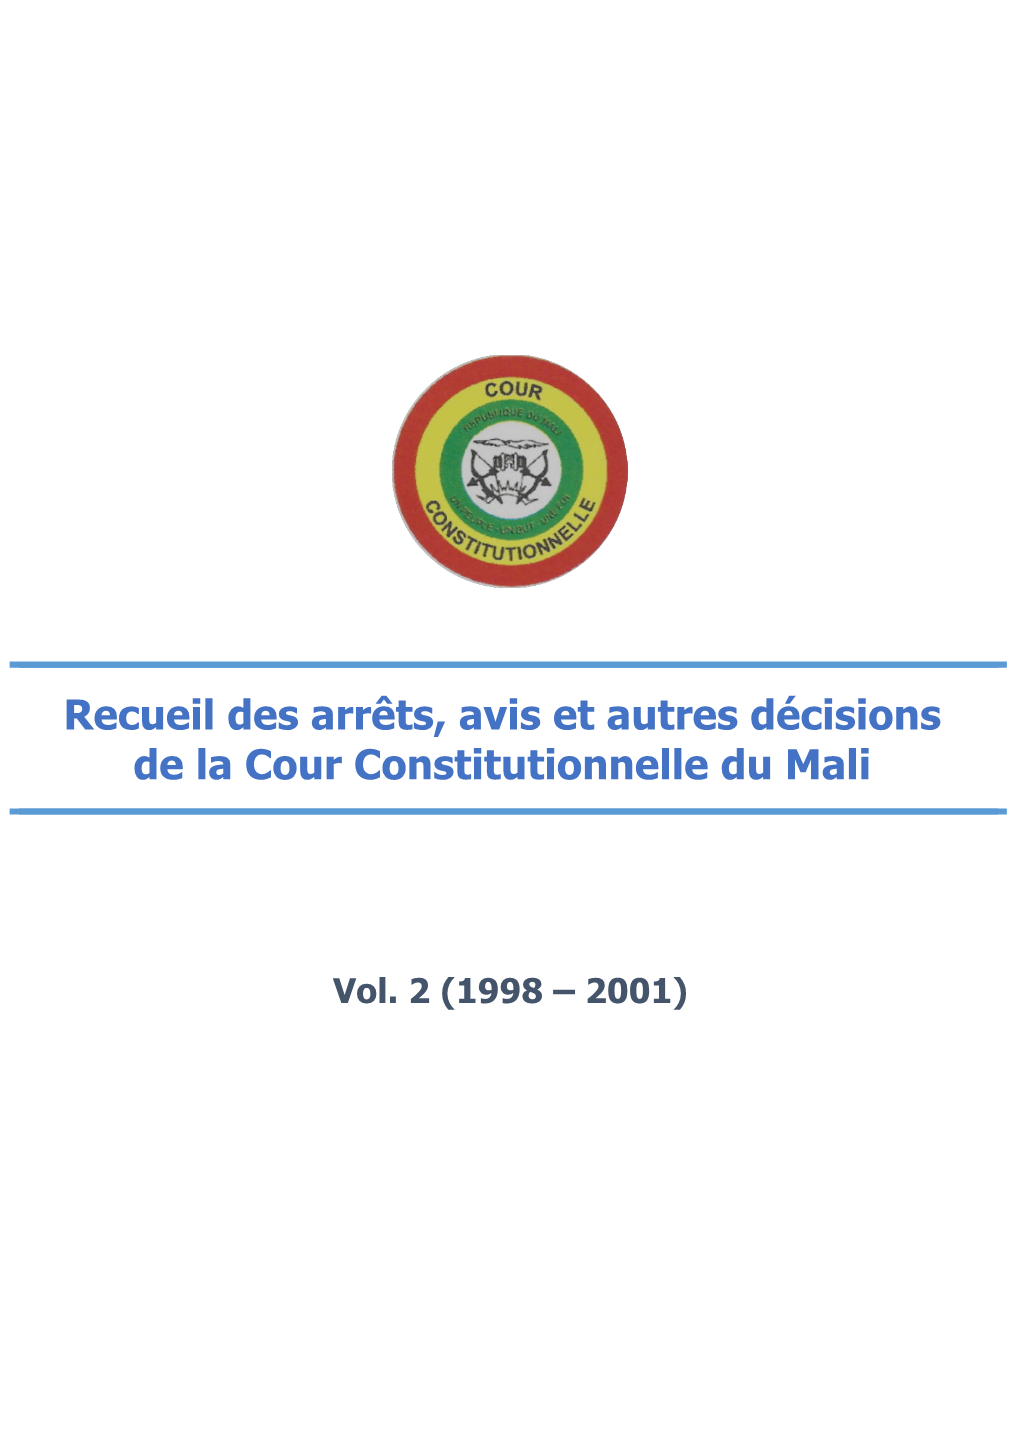 Recueil Volume 2 1998-2001